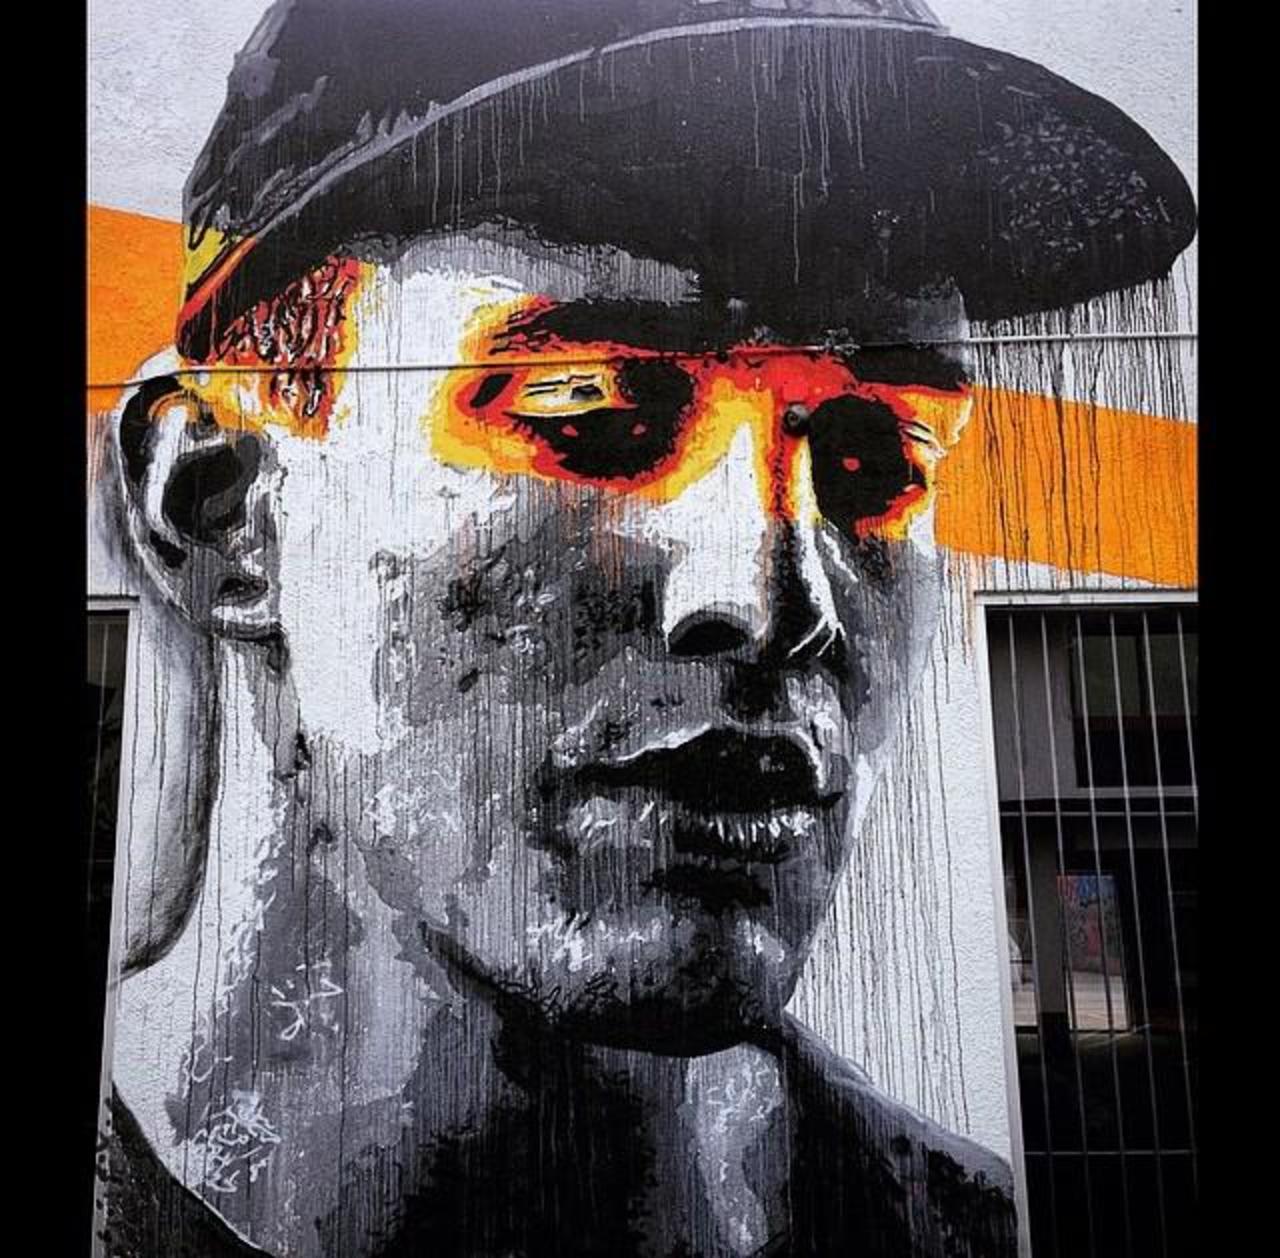 Sistemas4s: Artist Nils Westergard Street Art portrait in Miami 

#art #graffiti #mural #streetart http://t.co/ktgvy9Xzy5